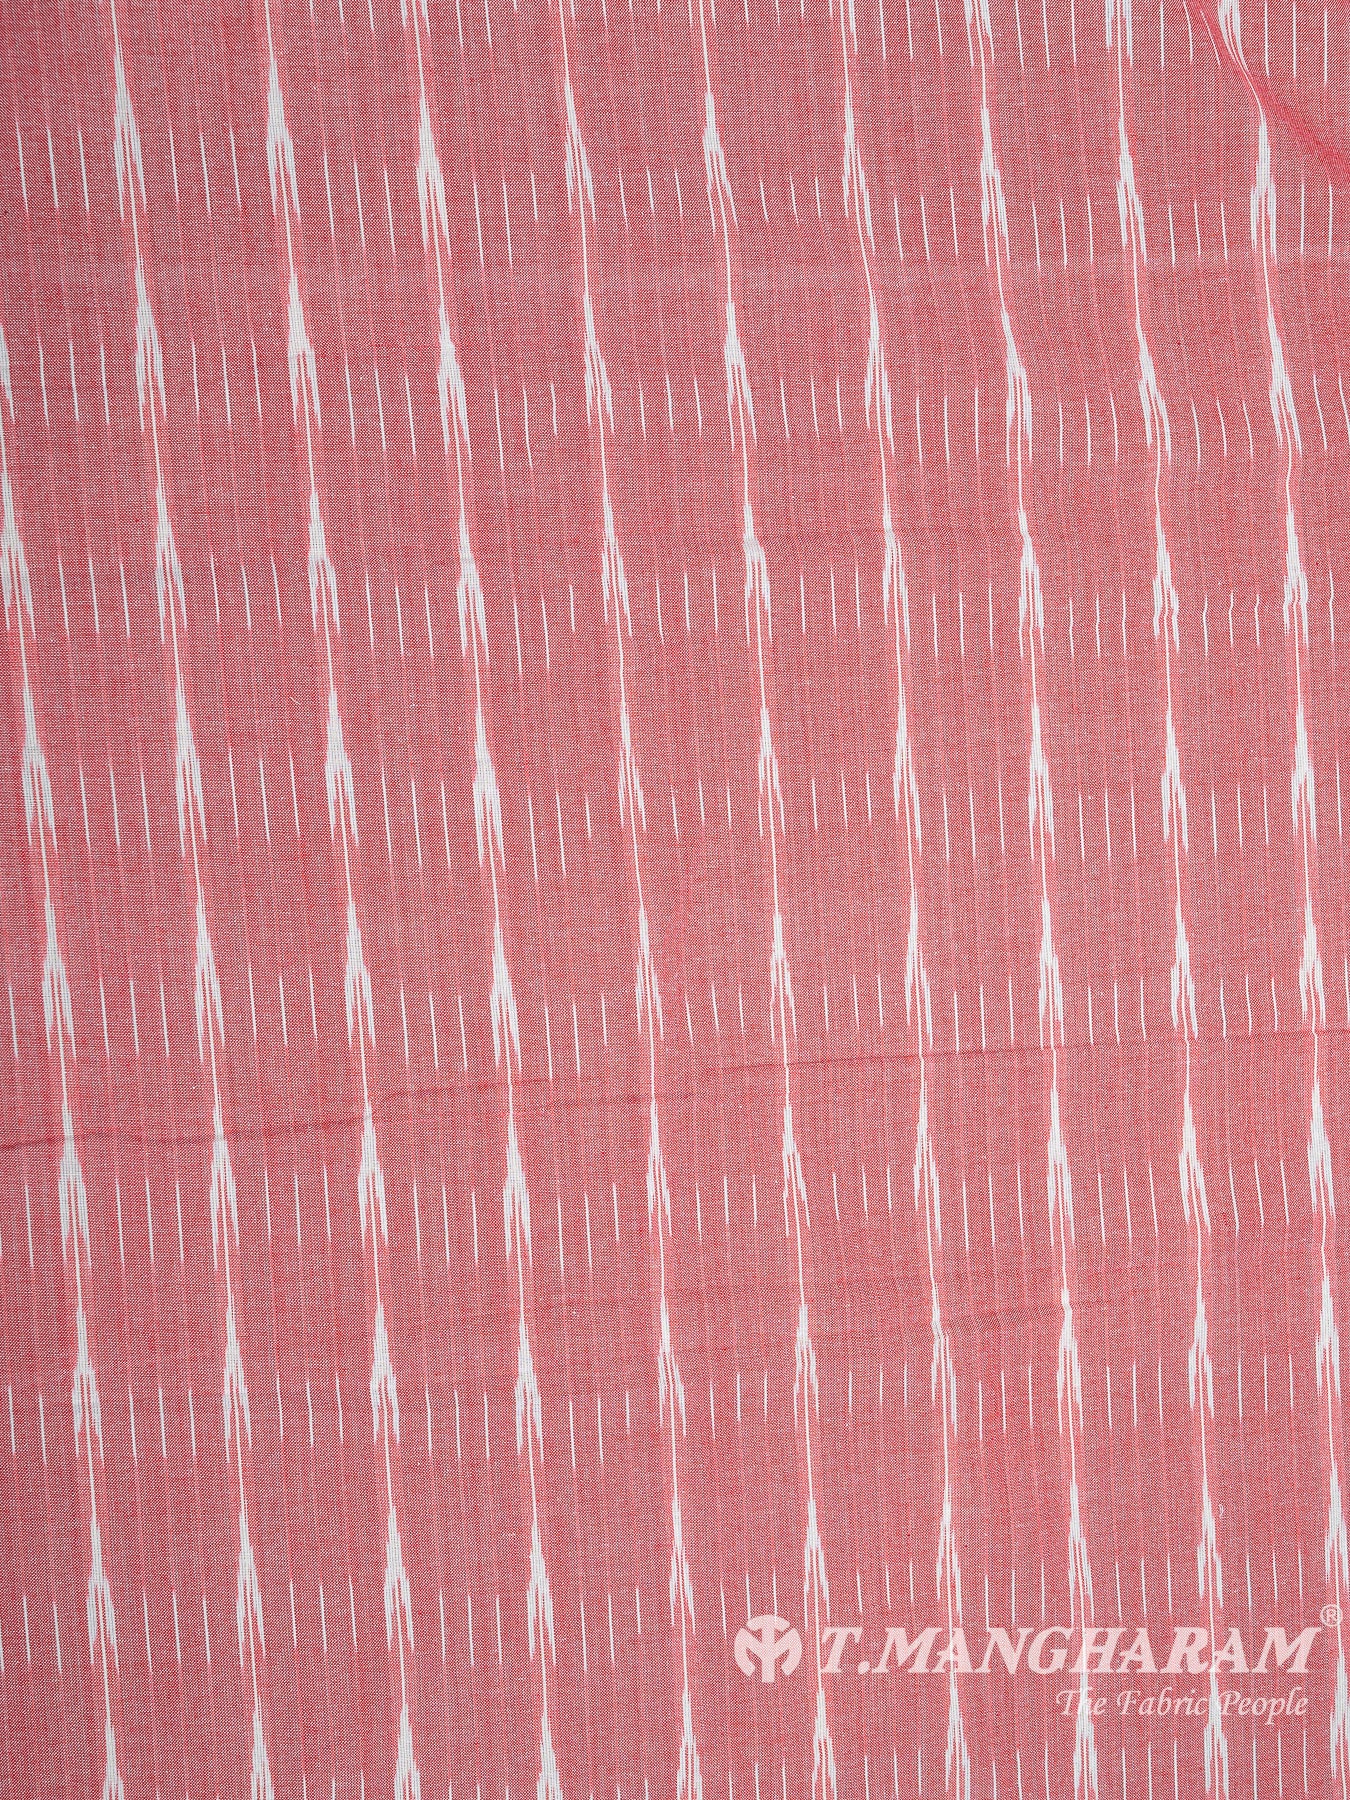 Pink Cotton Ikat Print Fabric - EB5838 view-3